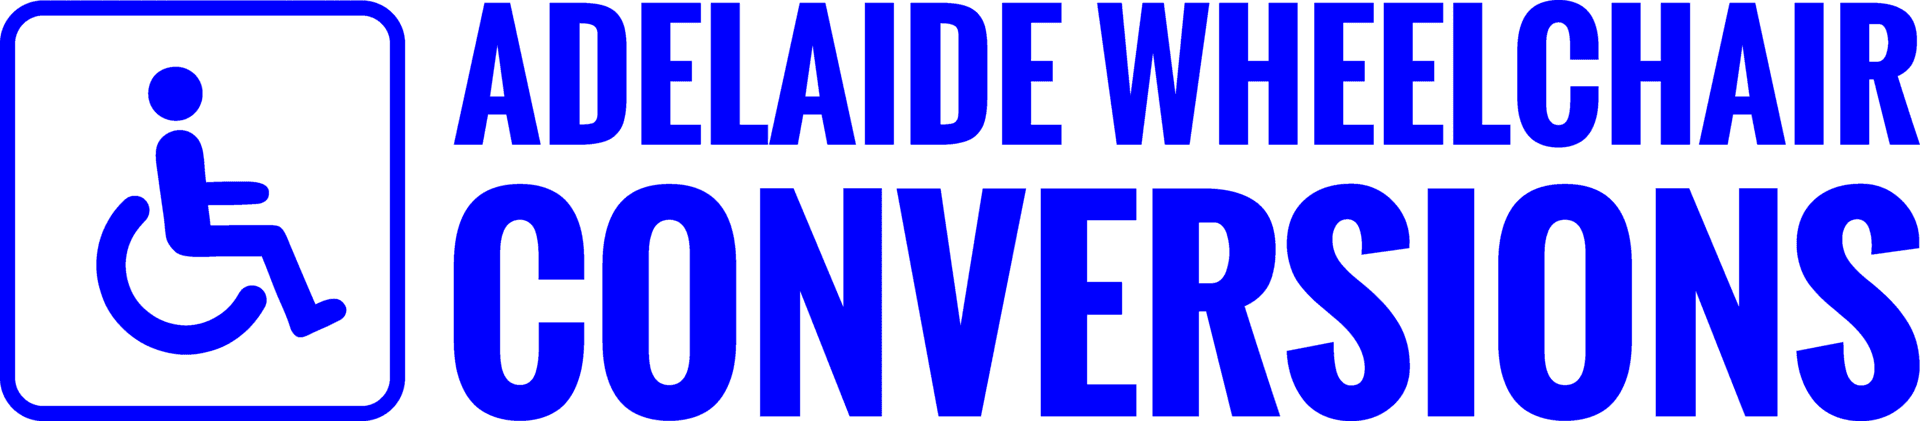 adelaide wheelchair conversions logo